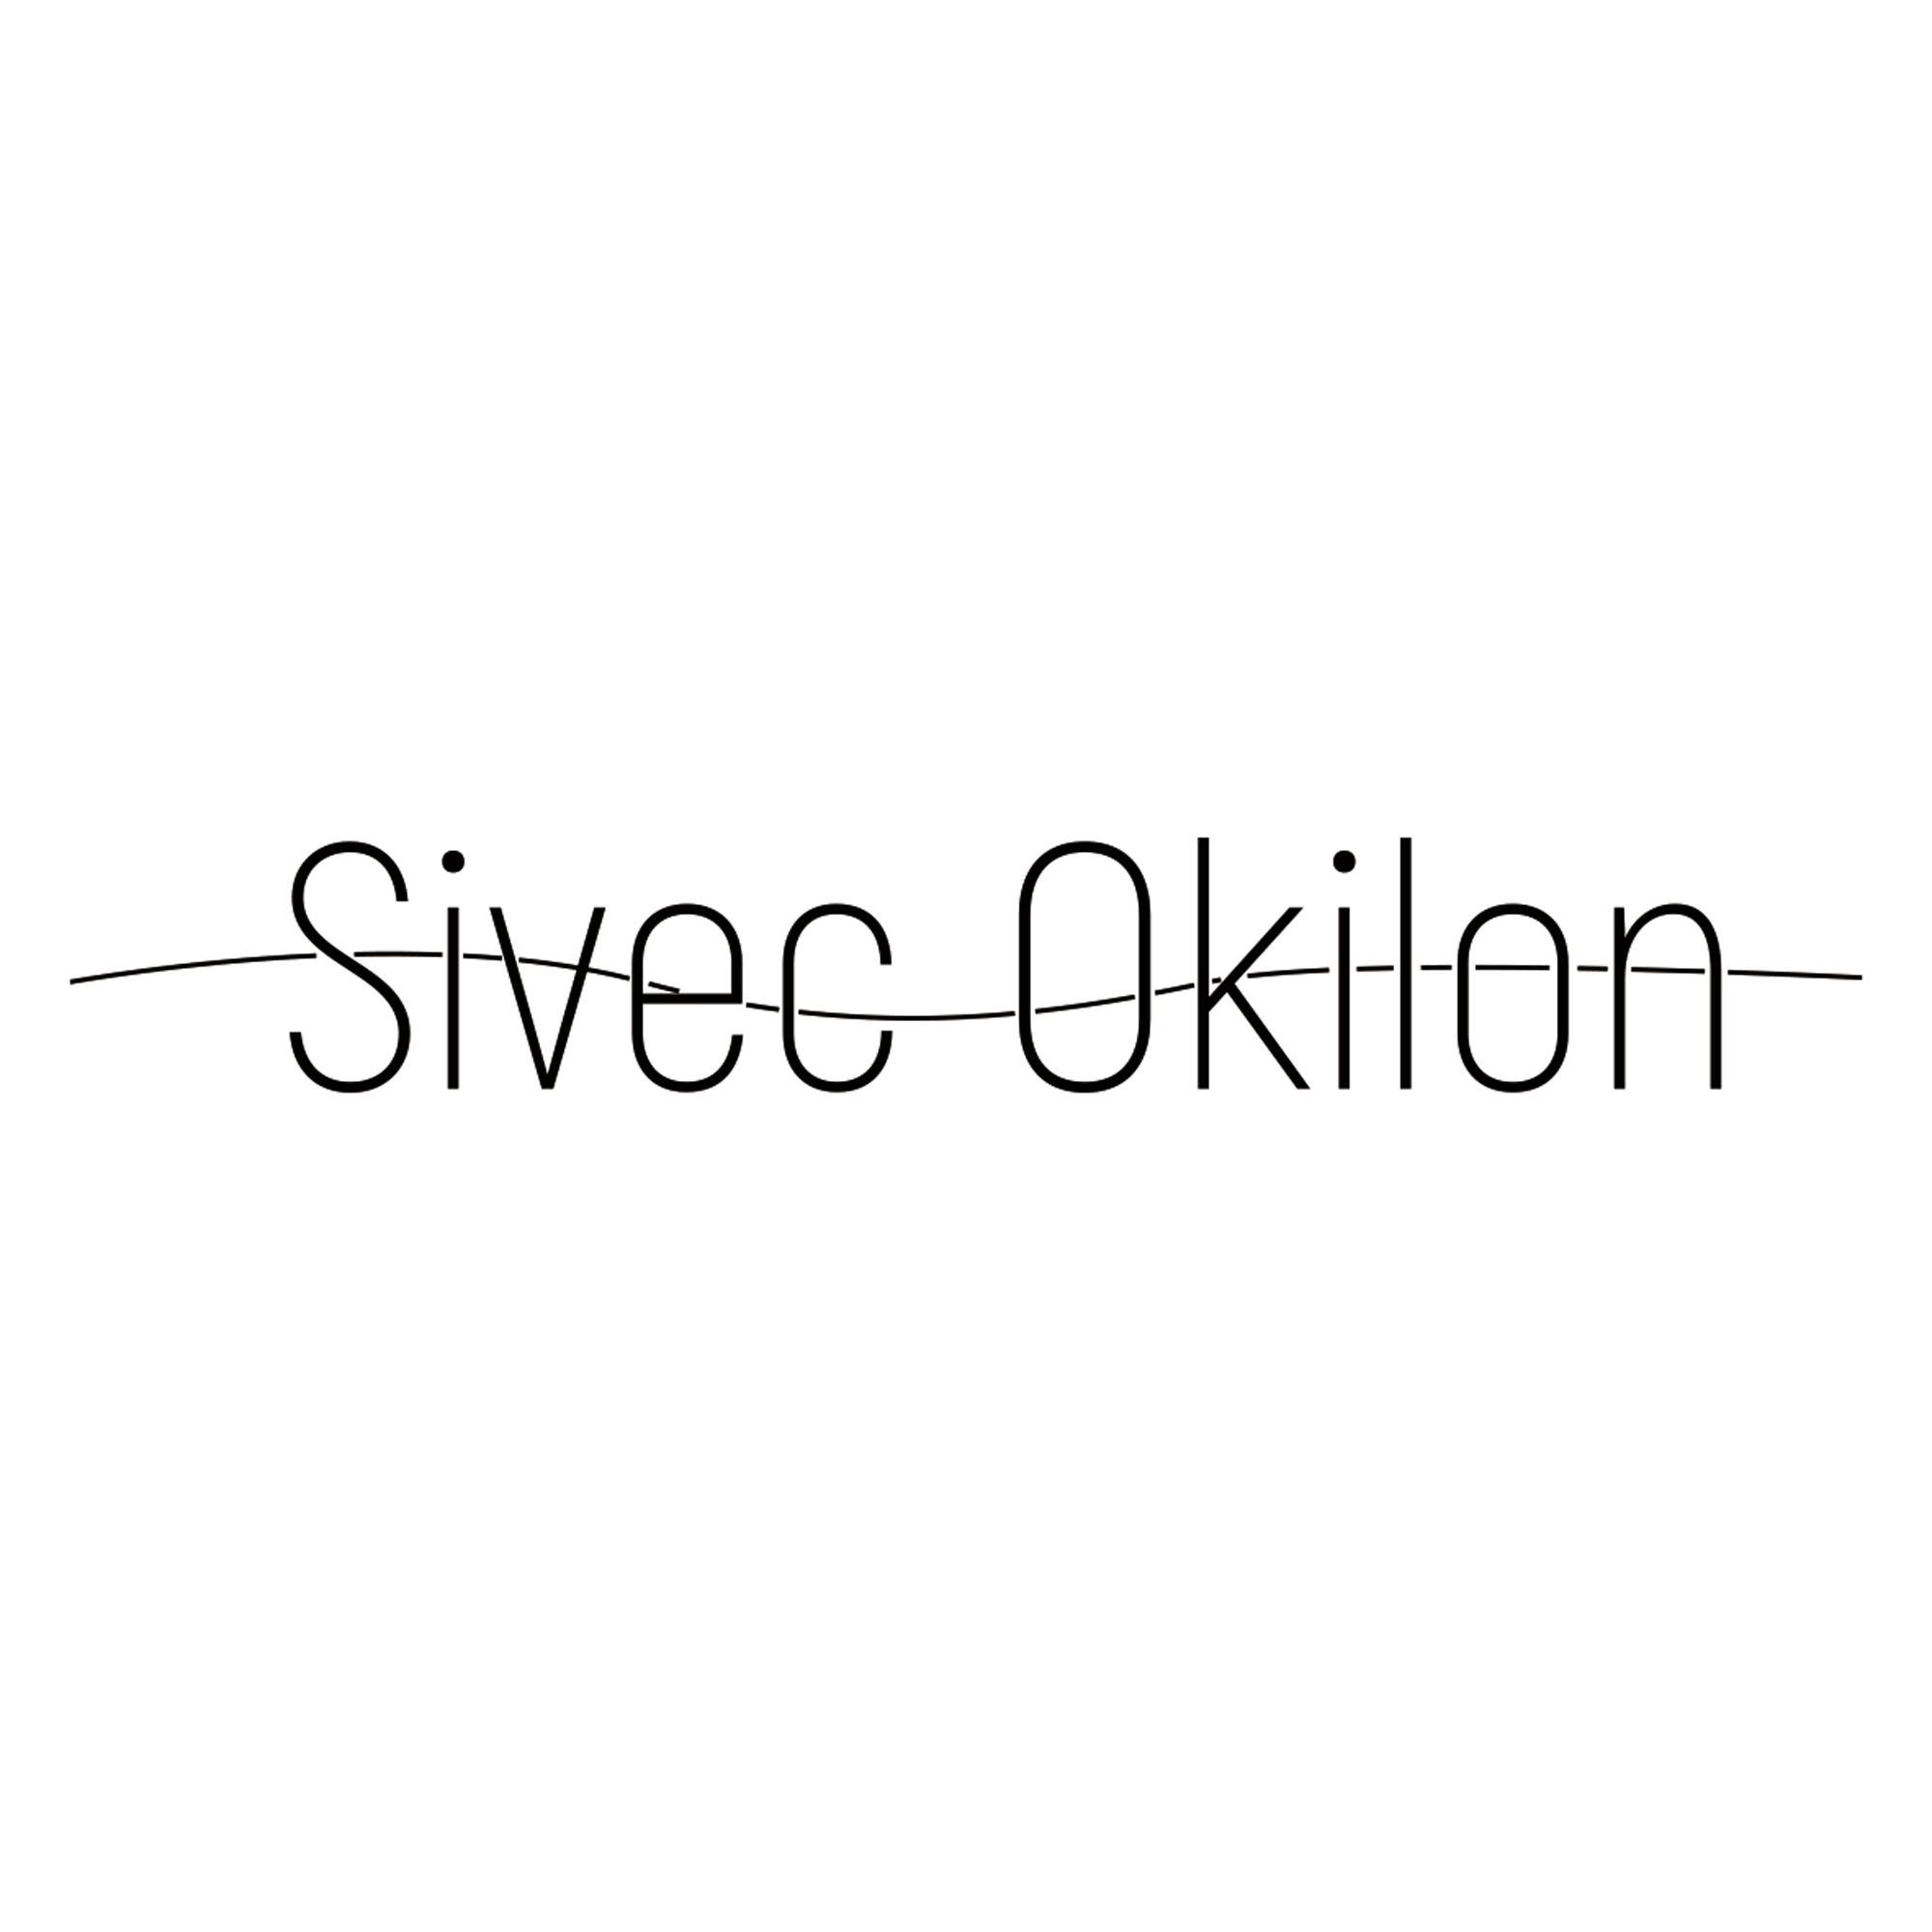 SIVEC OKILON商标转让